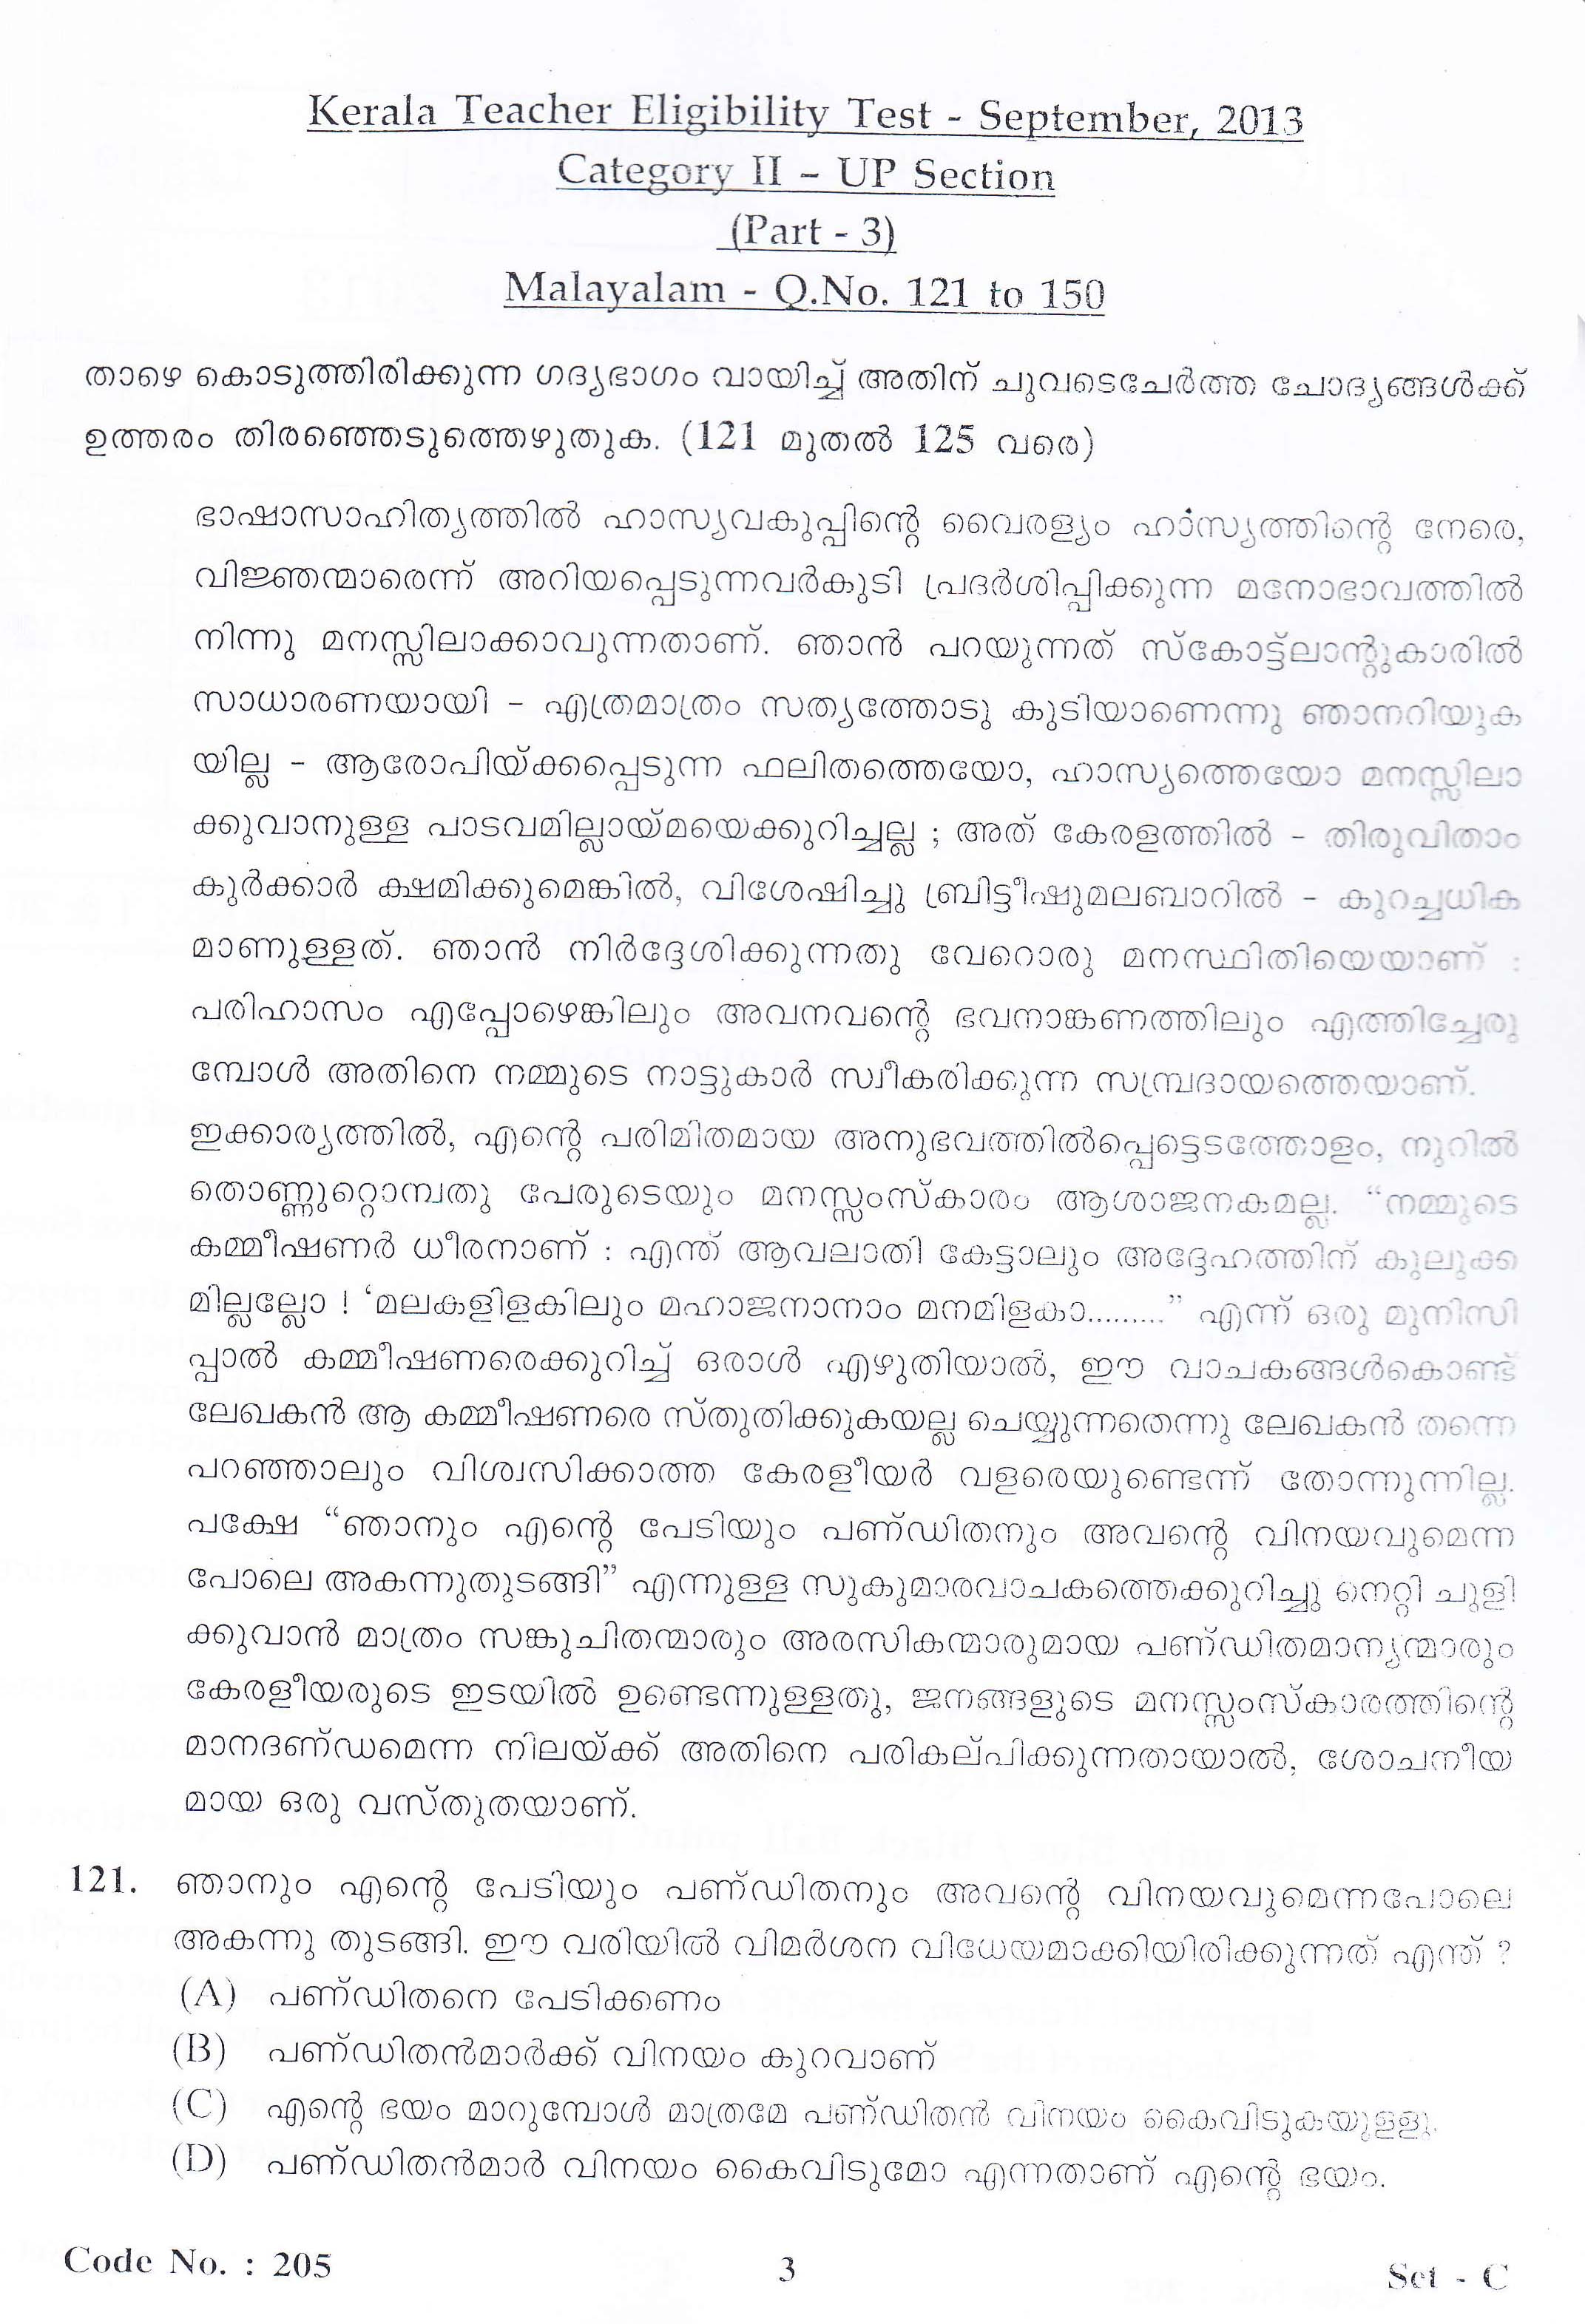 KTET Category II Part 3 Malayalam September 2013 Set C 1